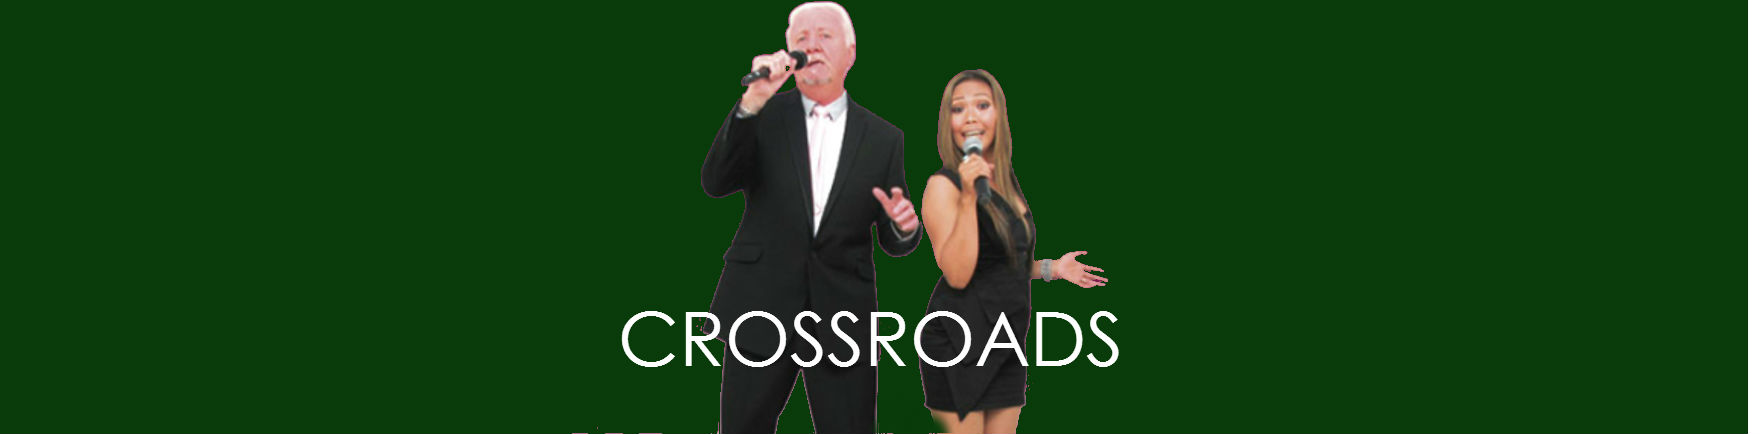 CrossRoads free show at The Hibs Club